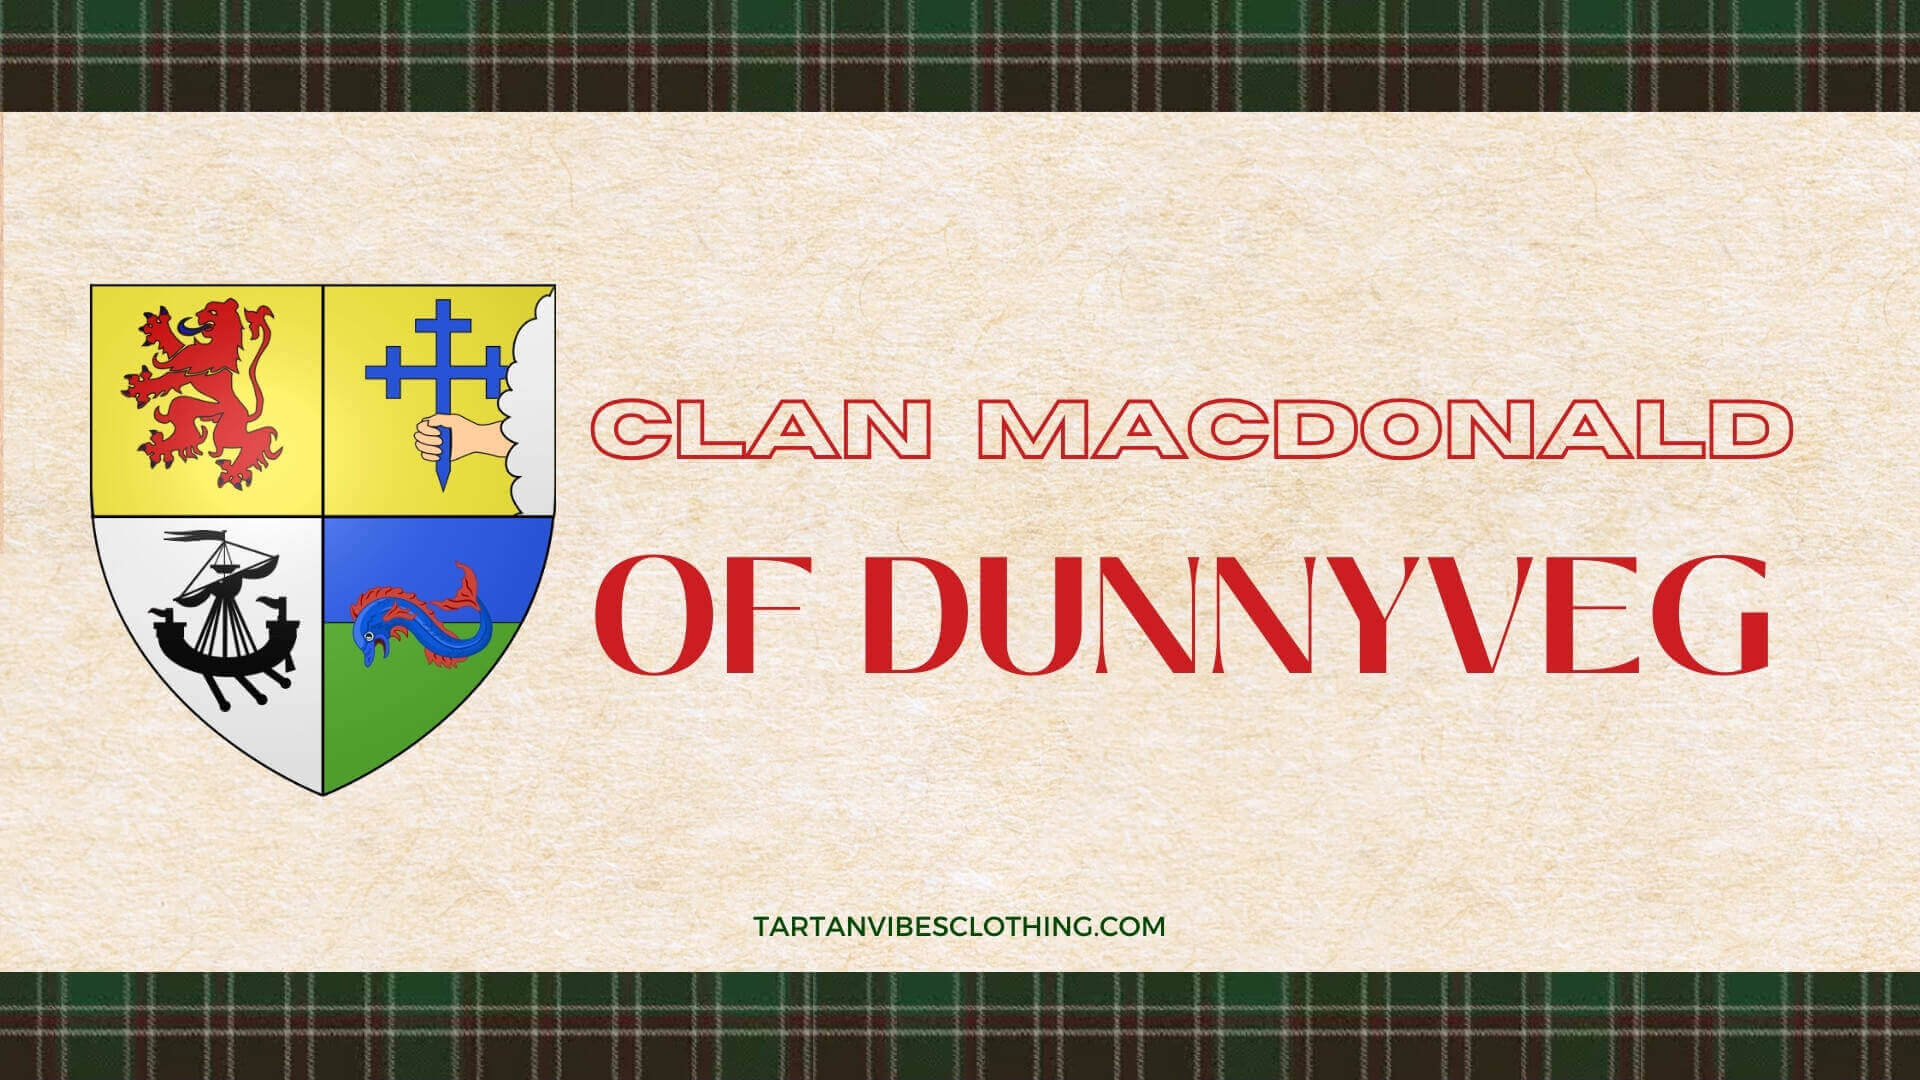 Clan Macdonald of Dunnyveg: History and Heritage